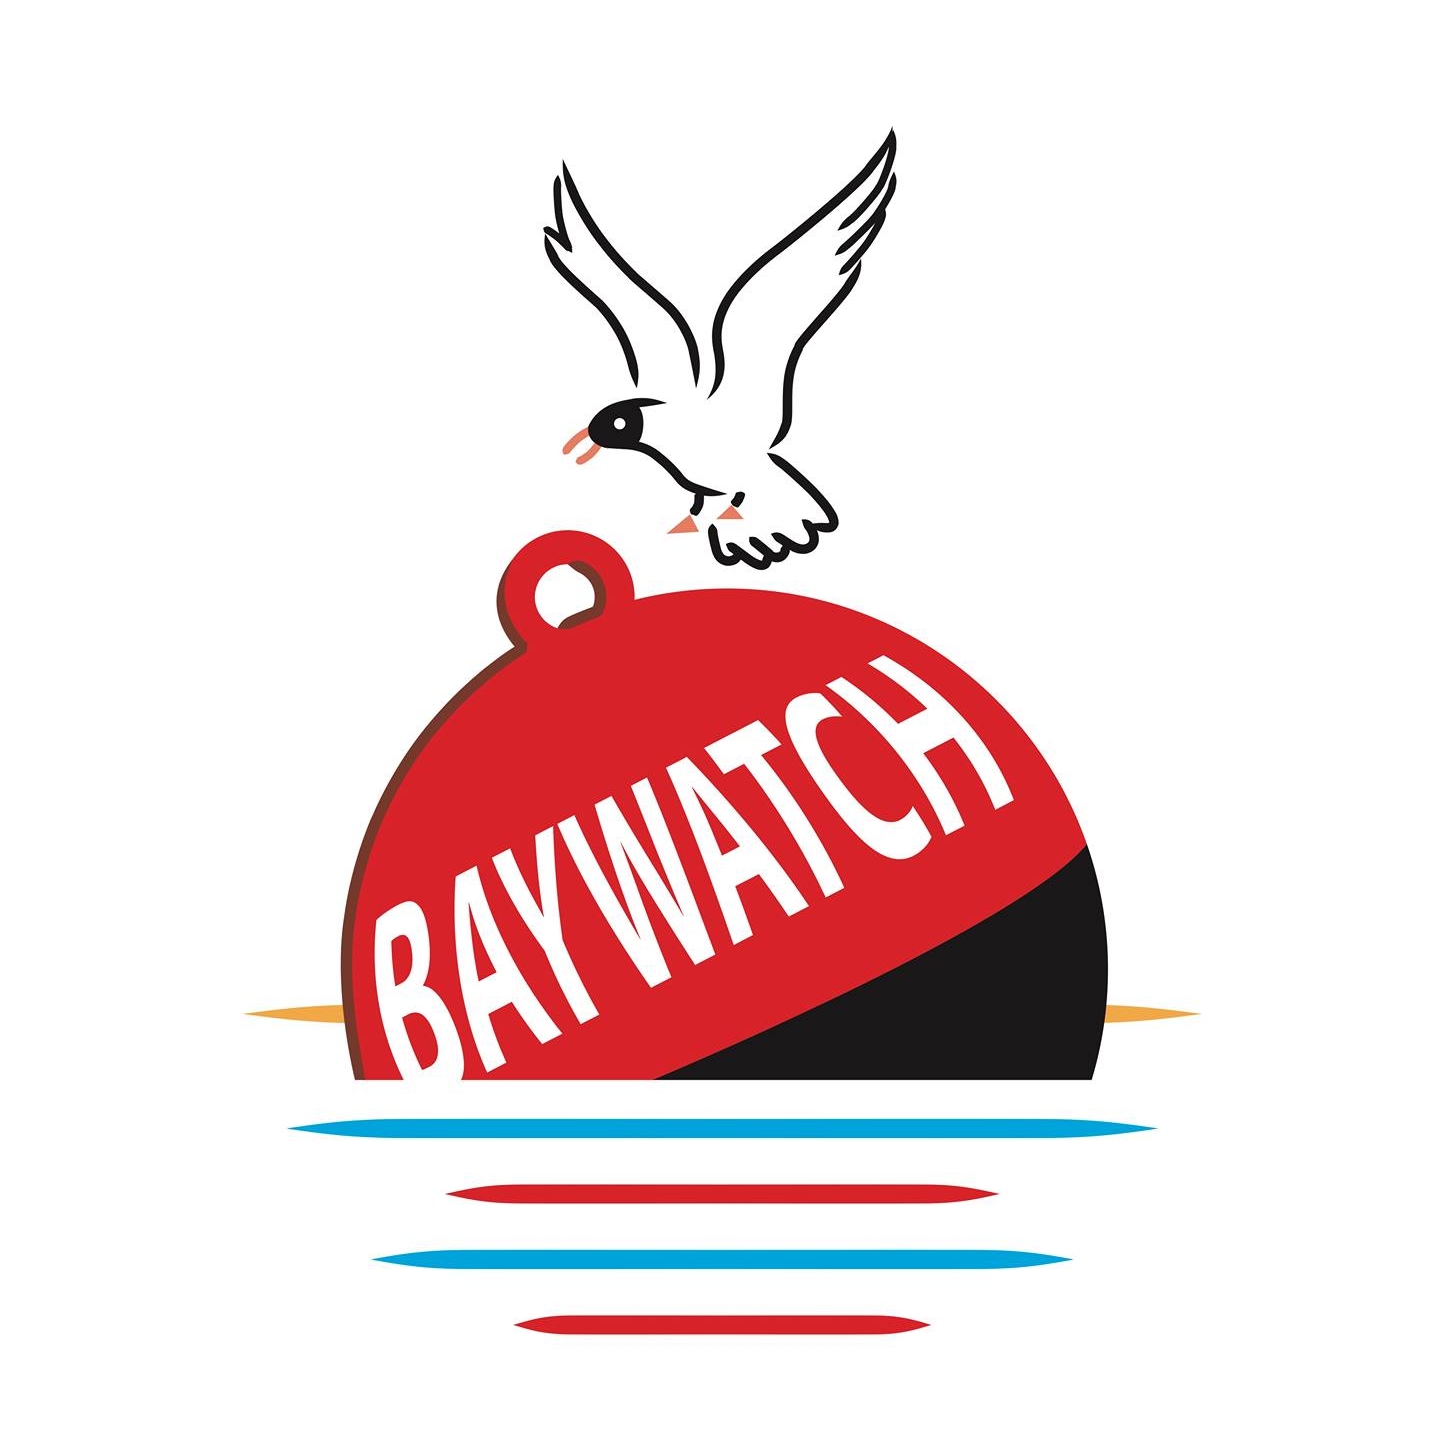 Baywatch on the Beach Restaurant & Beach Shop